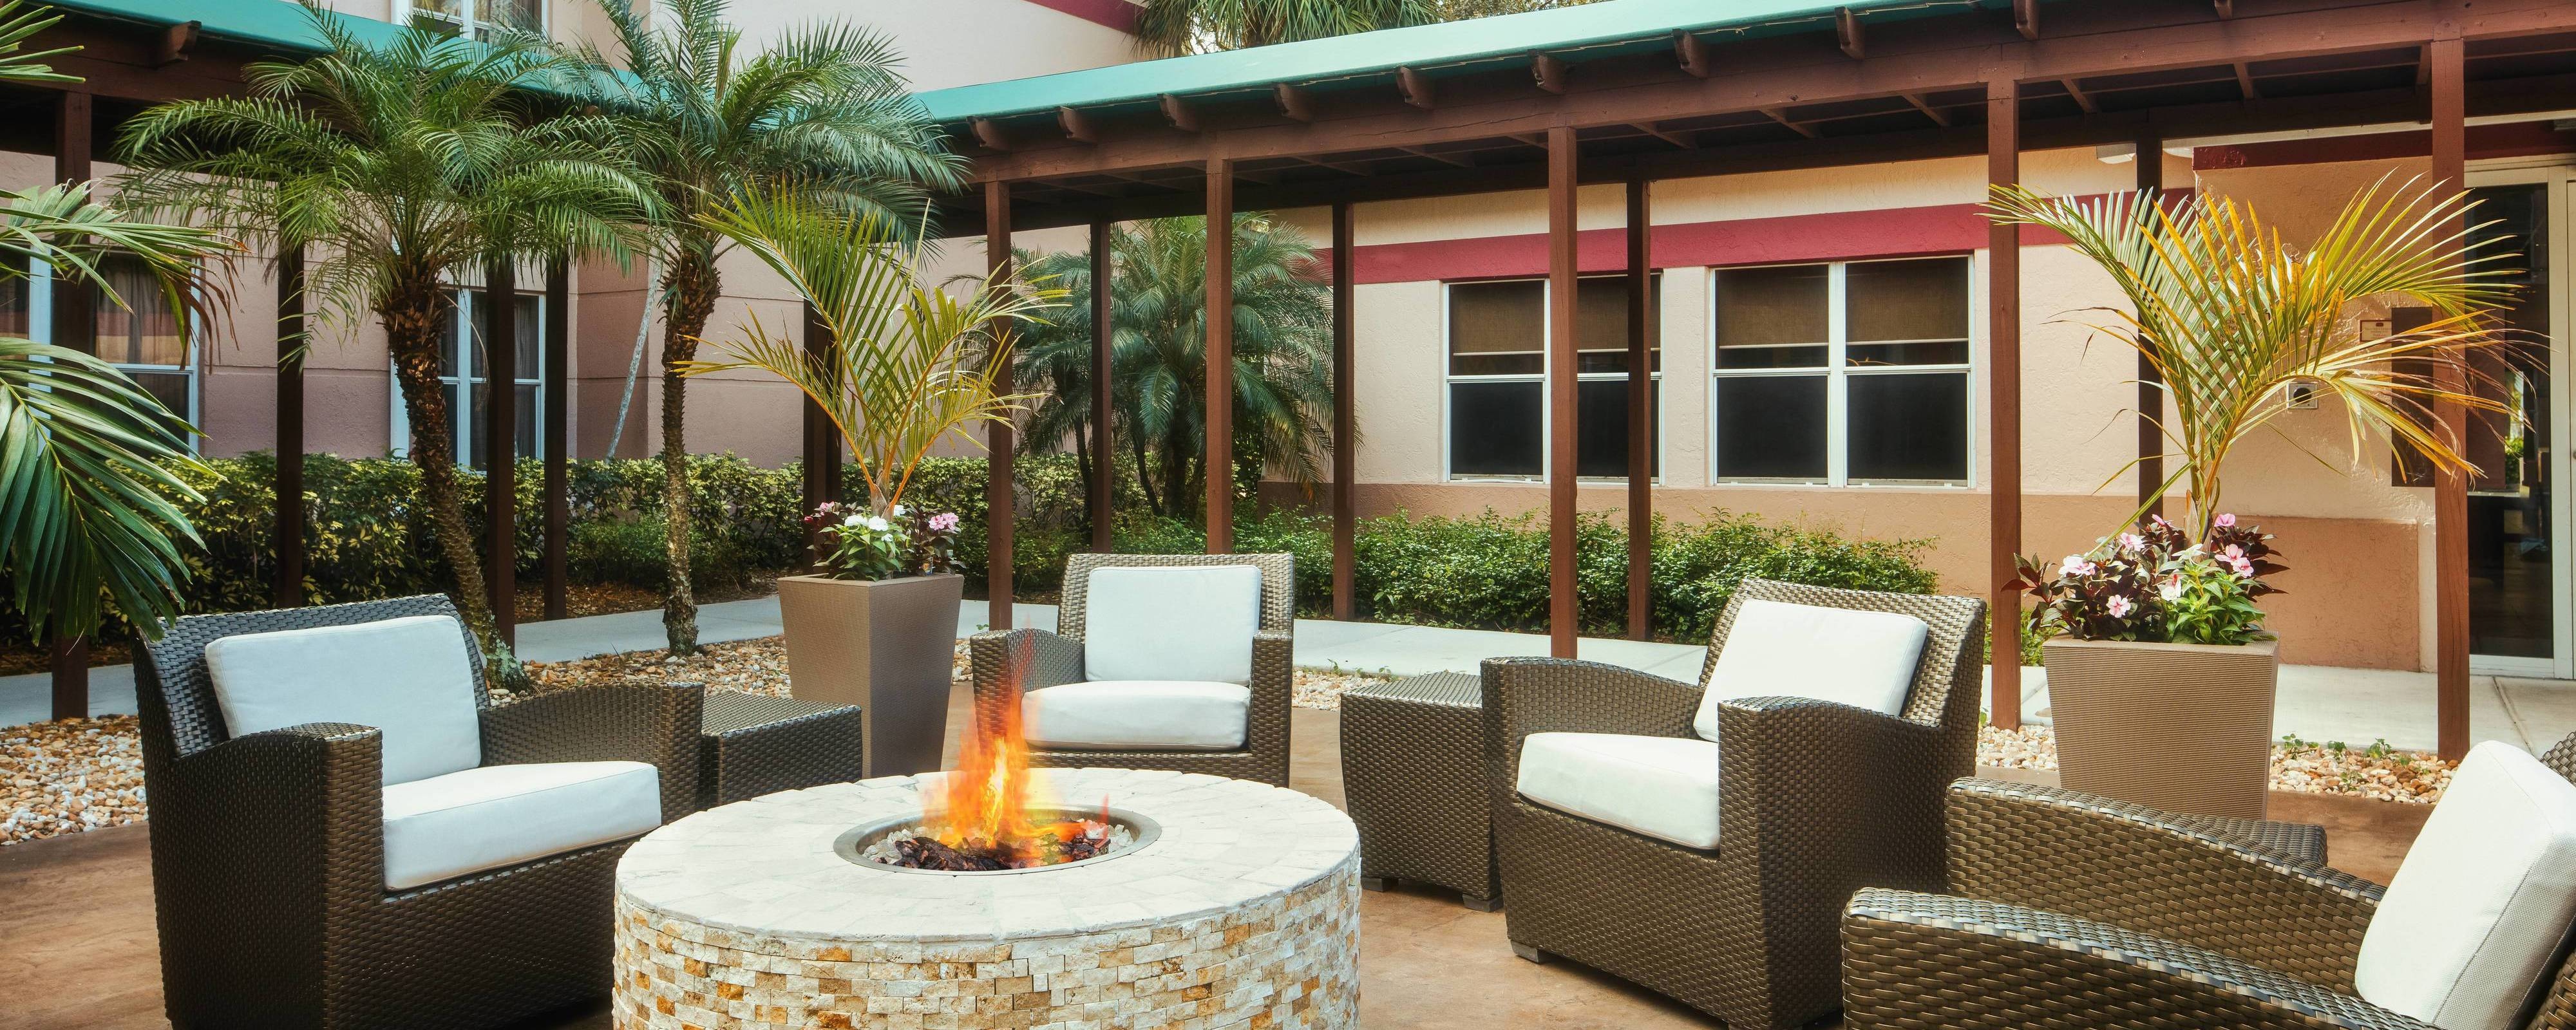 Hotels Plantation FL 33324 | Residence Inn Fort Lauderdale Plantation